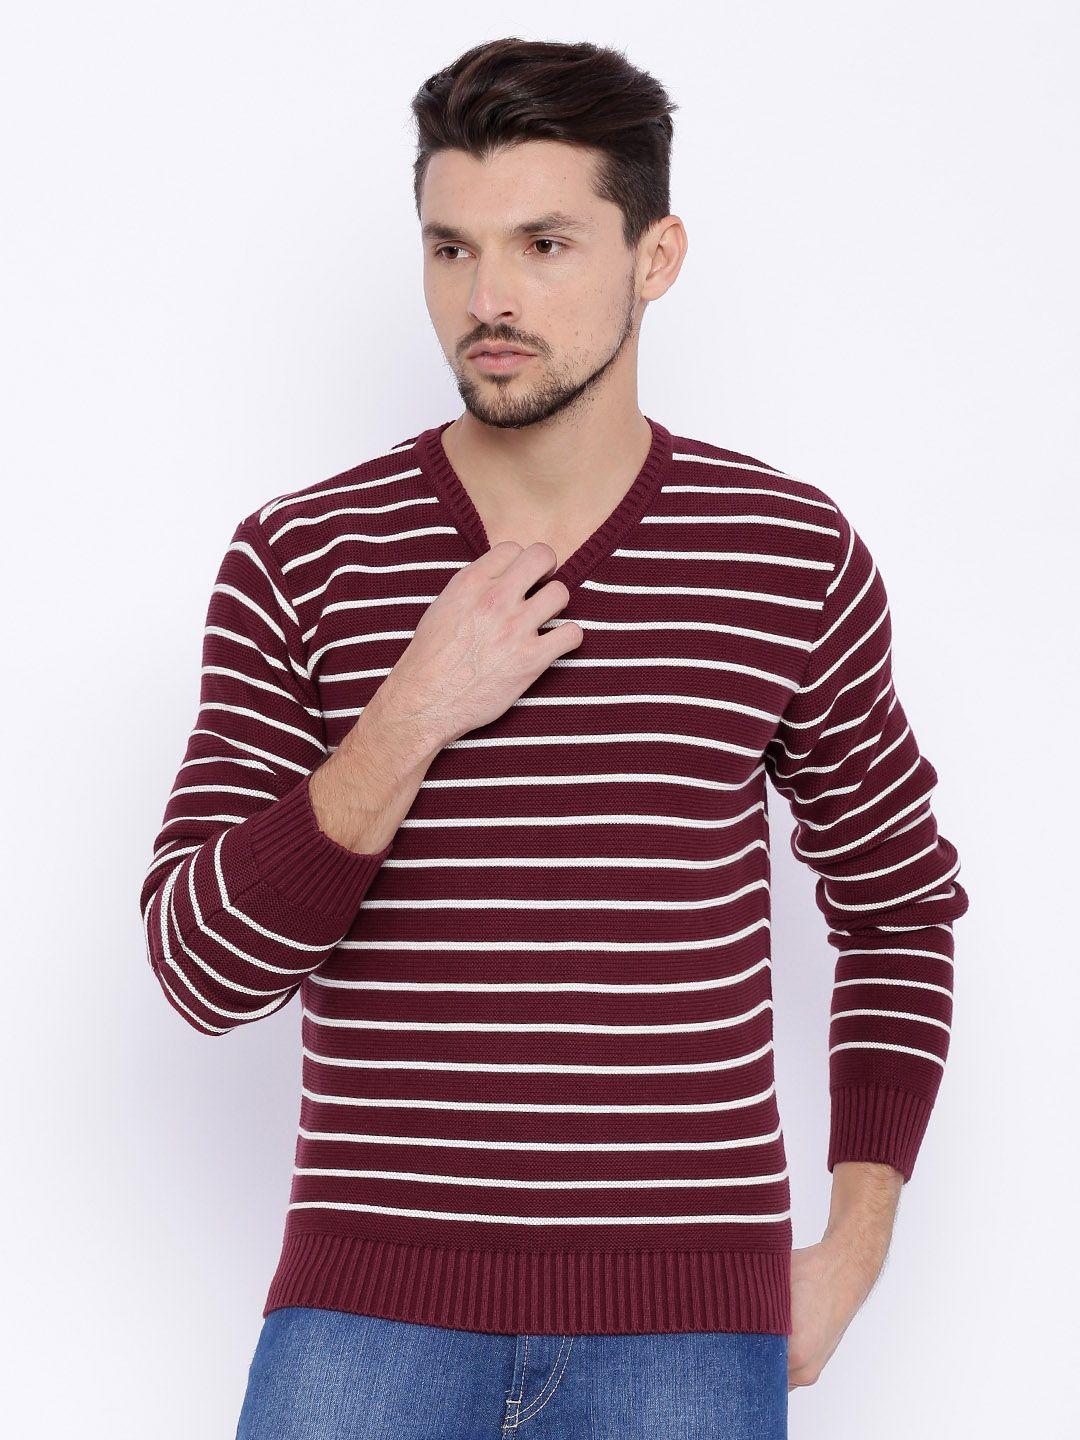 Basics Maroon & White Striped Sweater